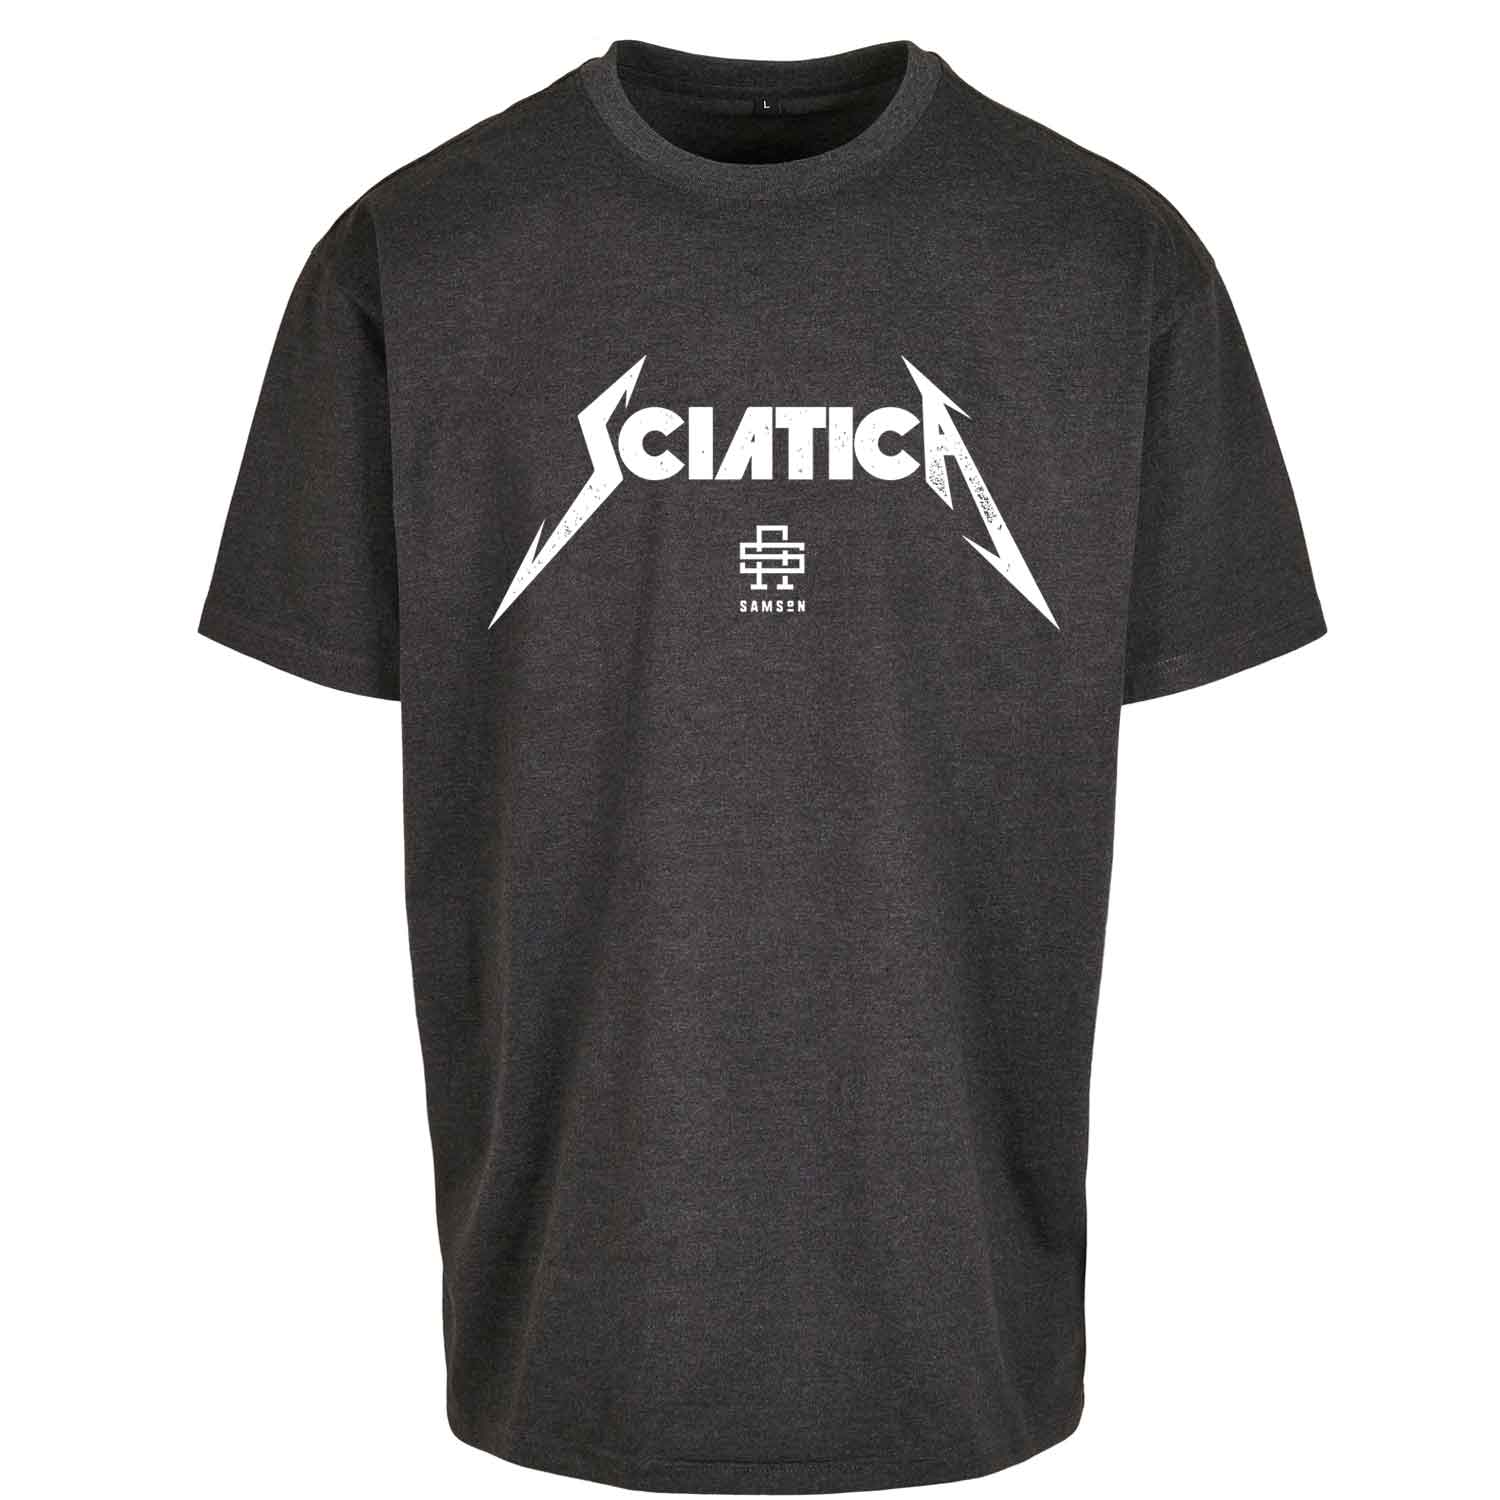 Sciatica Oversized T-Shirt